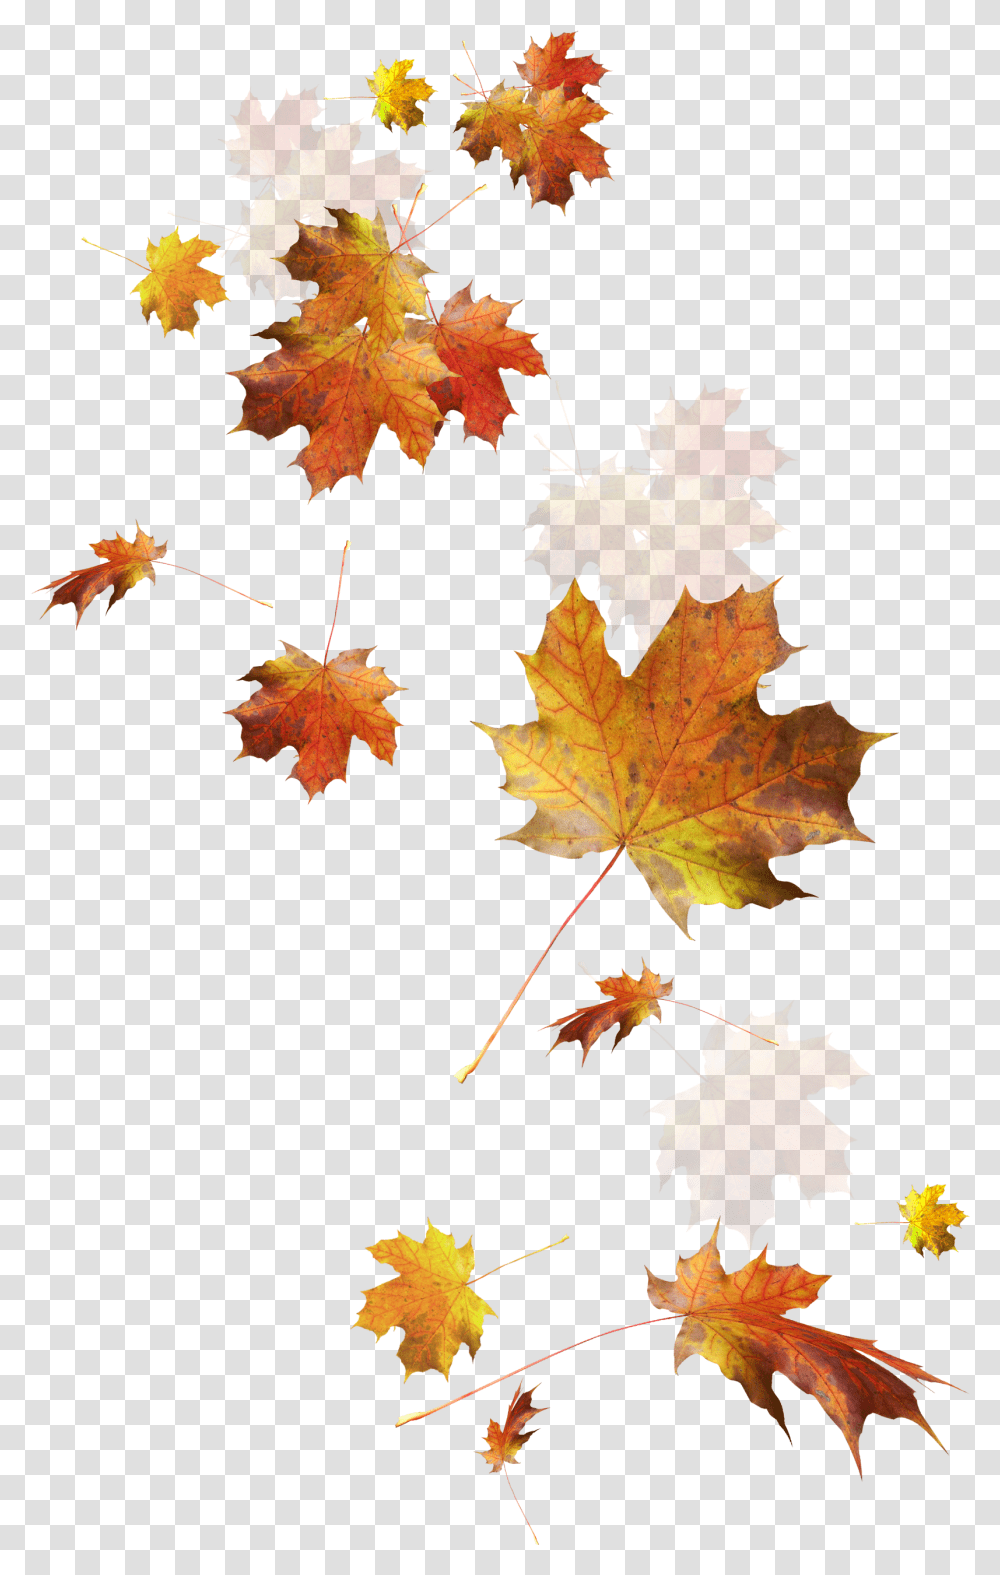 Autumn Leaves Leaf Color Fall Autumn Leaves, Plant, Tree, Maple, Maple Leaf Transparent Png